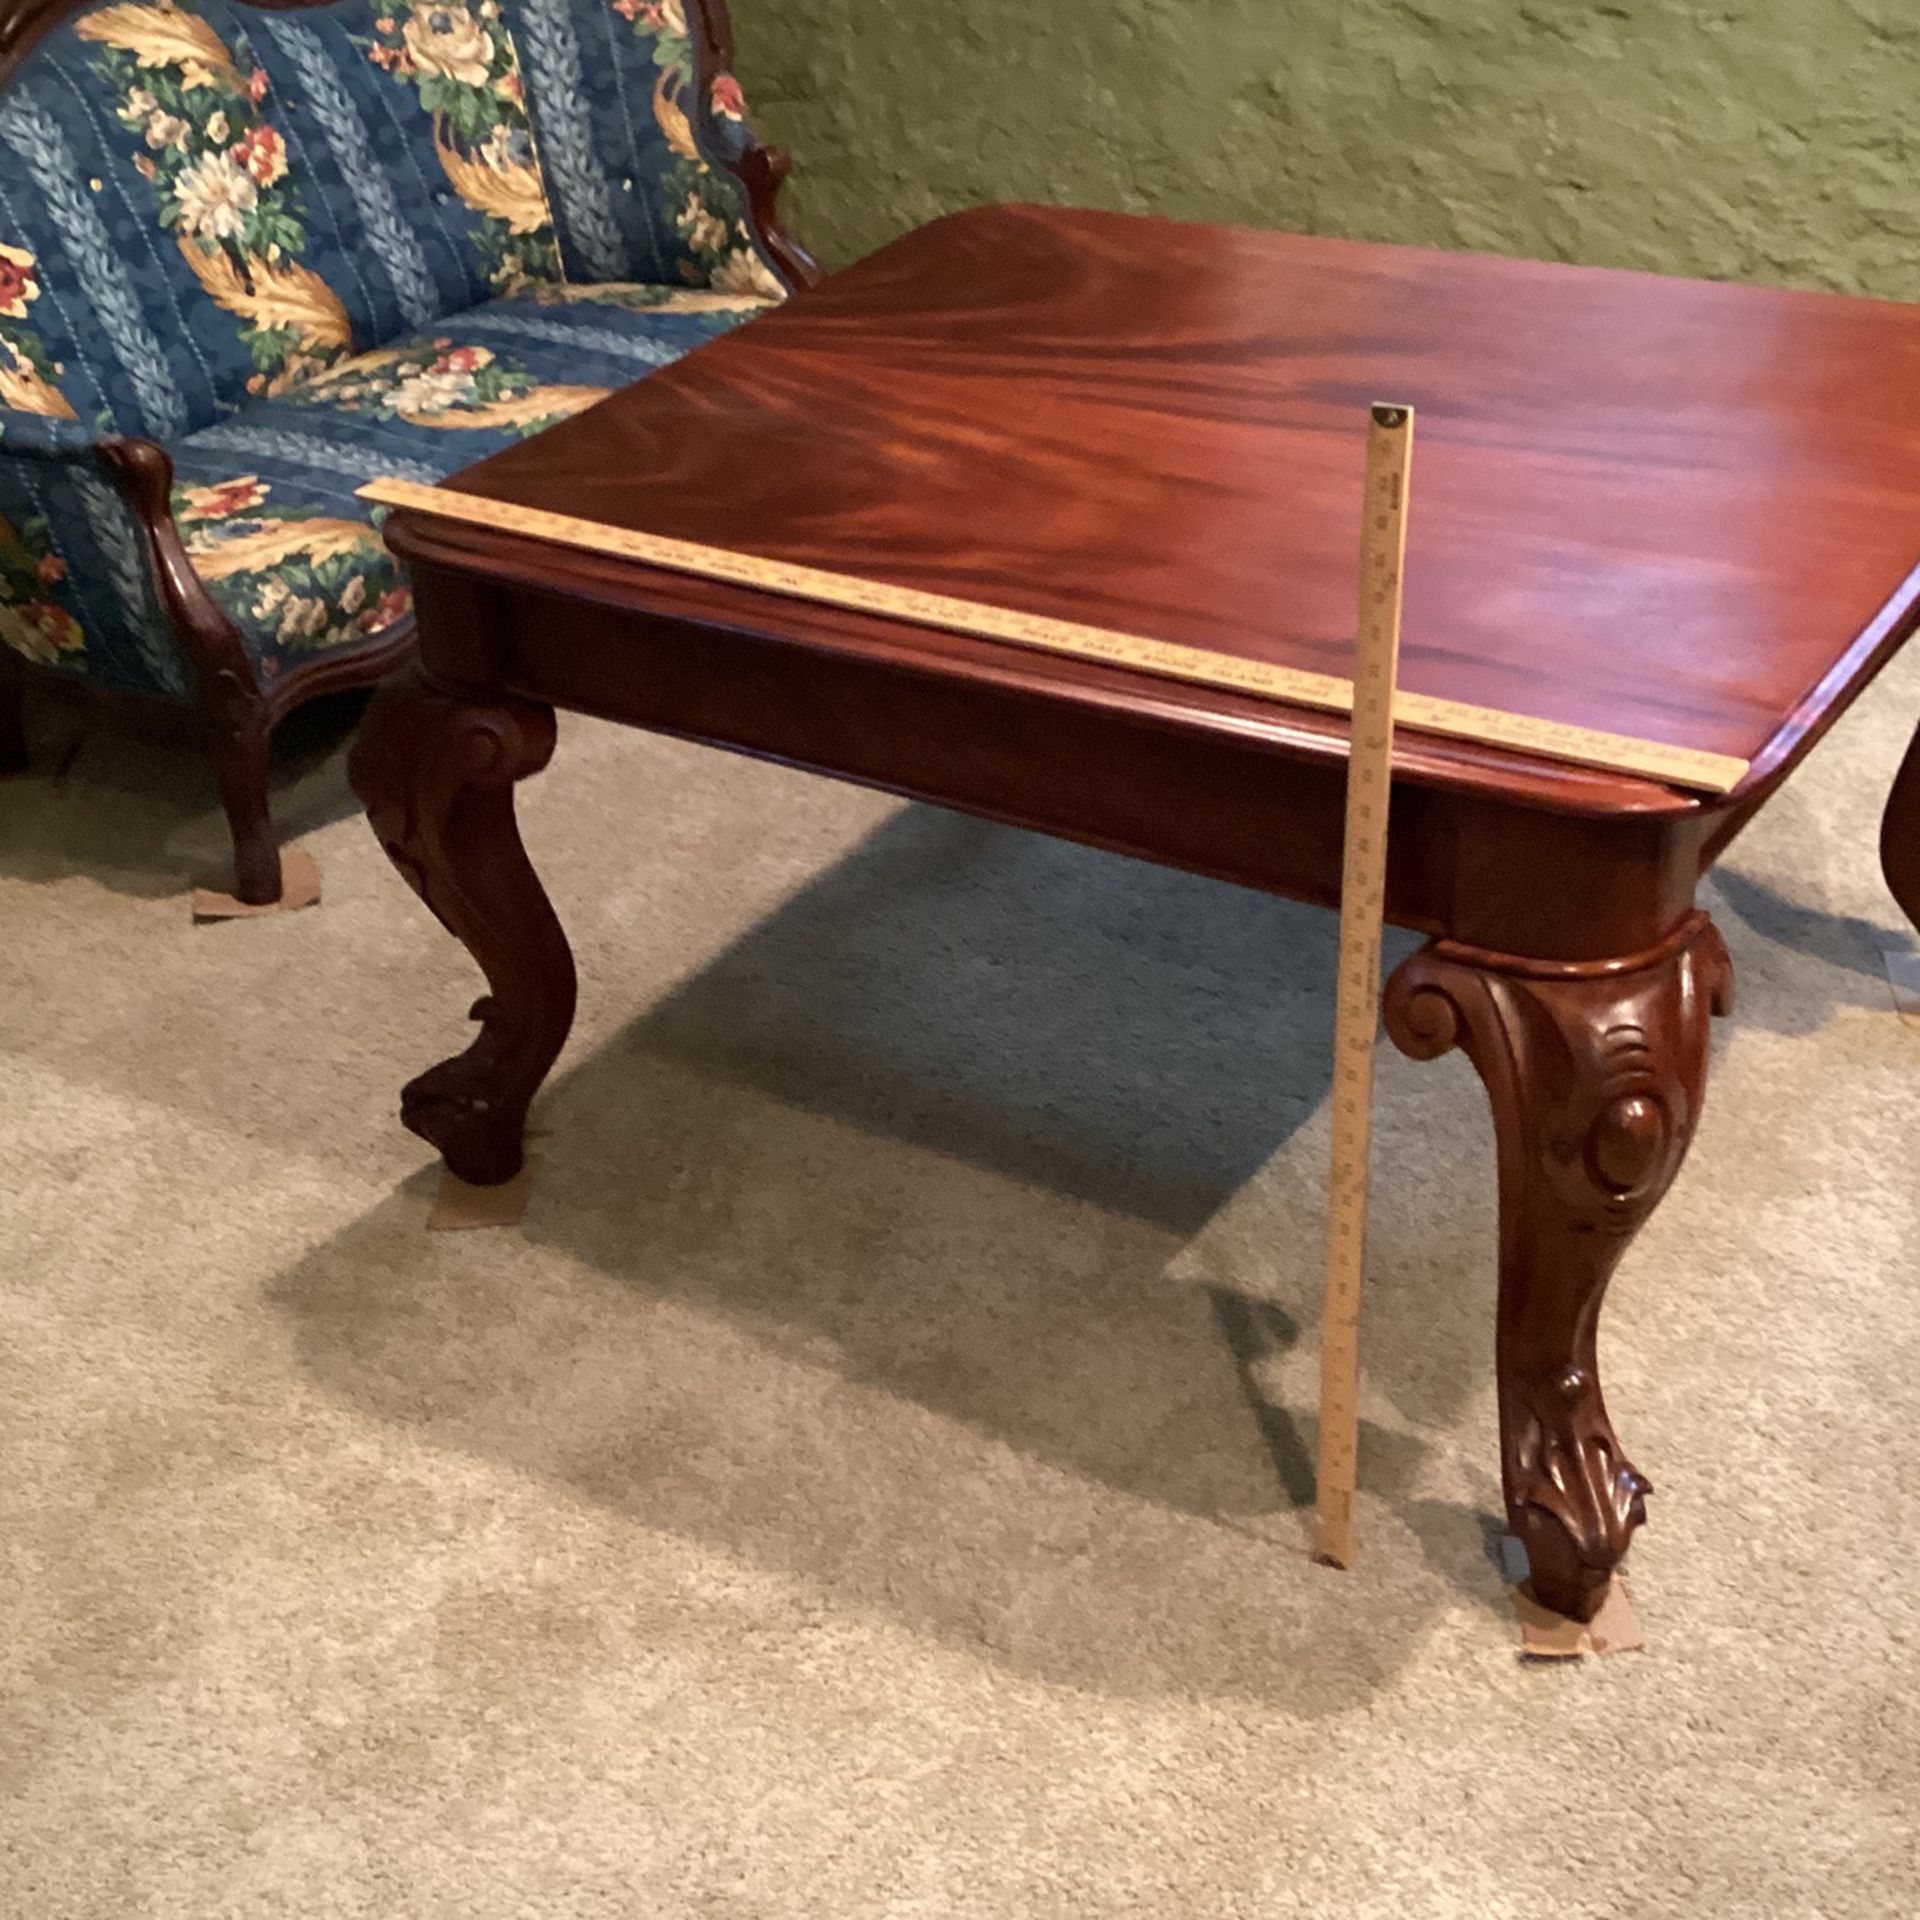 Antique Mahogany Table. 4’ Square. 